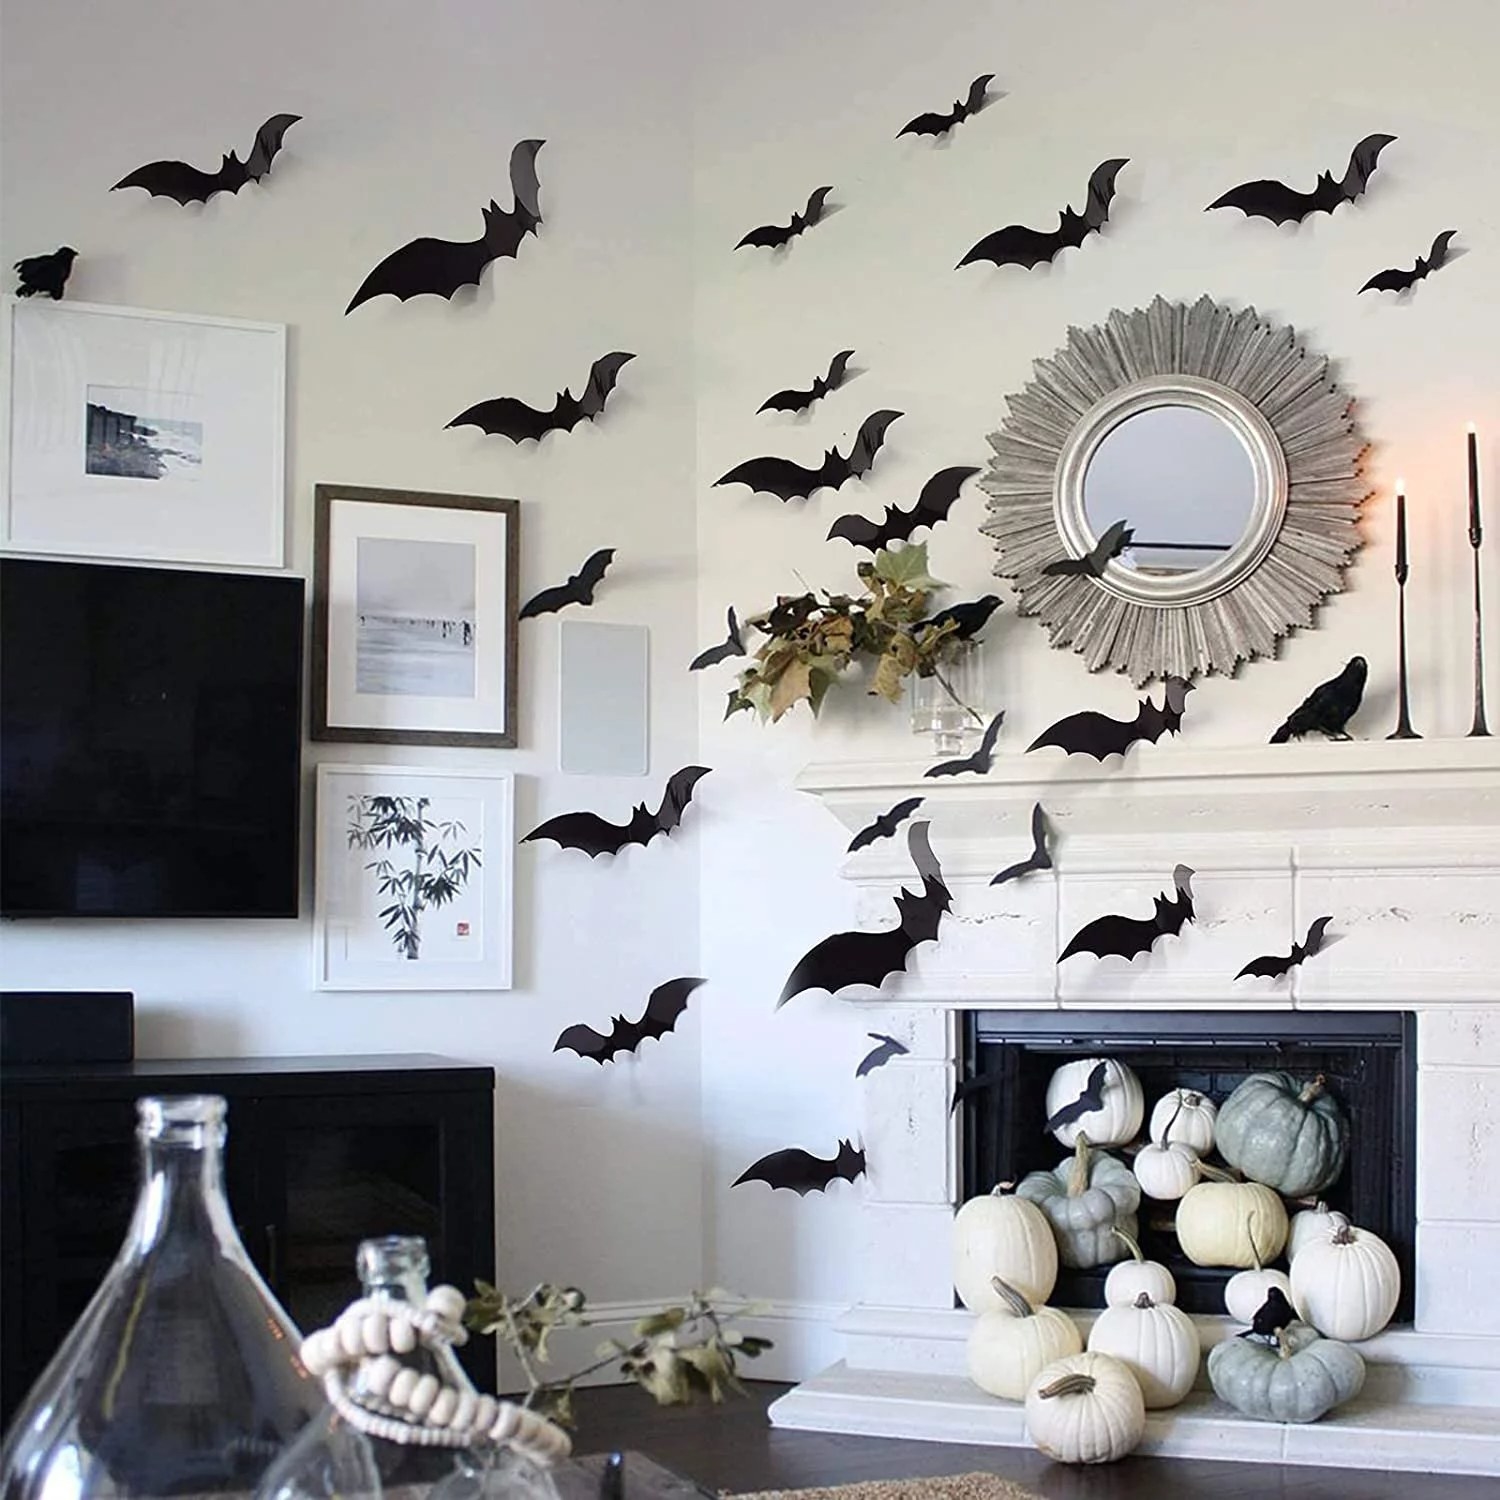 Bats hanging on living room wall